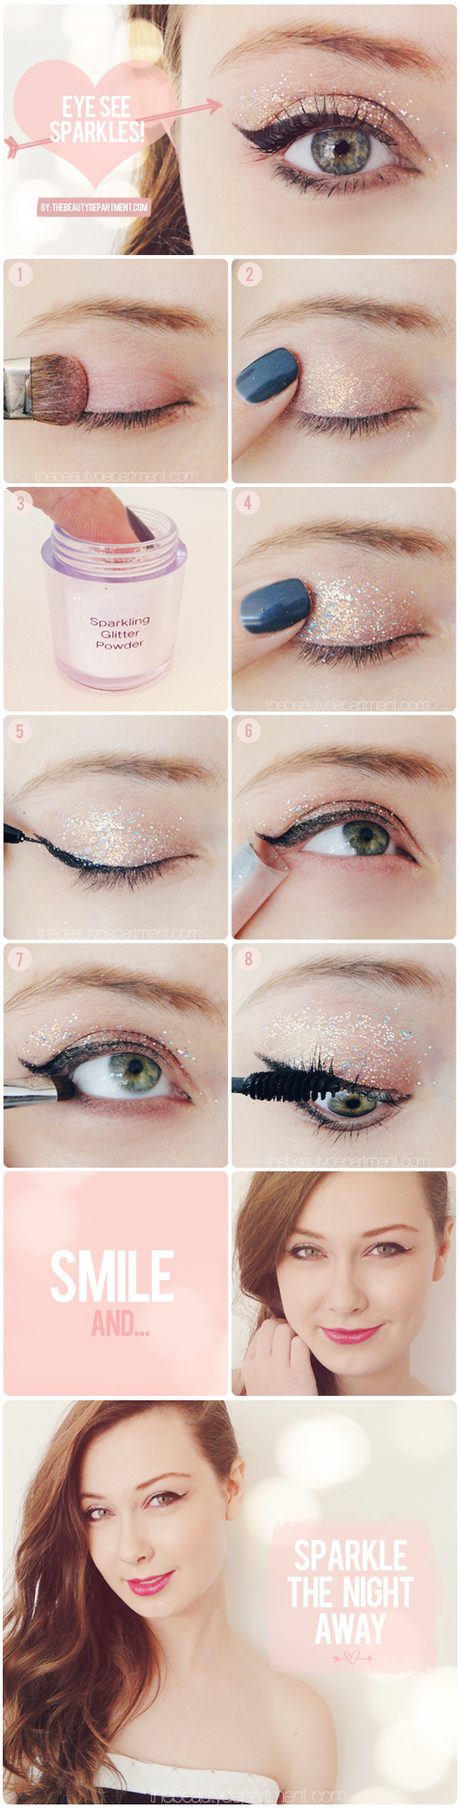 party-makeup-tutorials-29 Party make-up tutorials